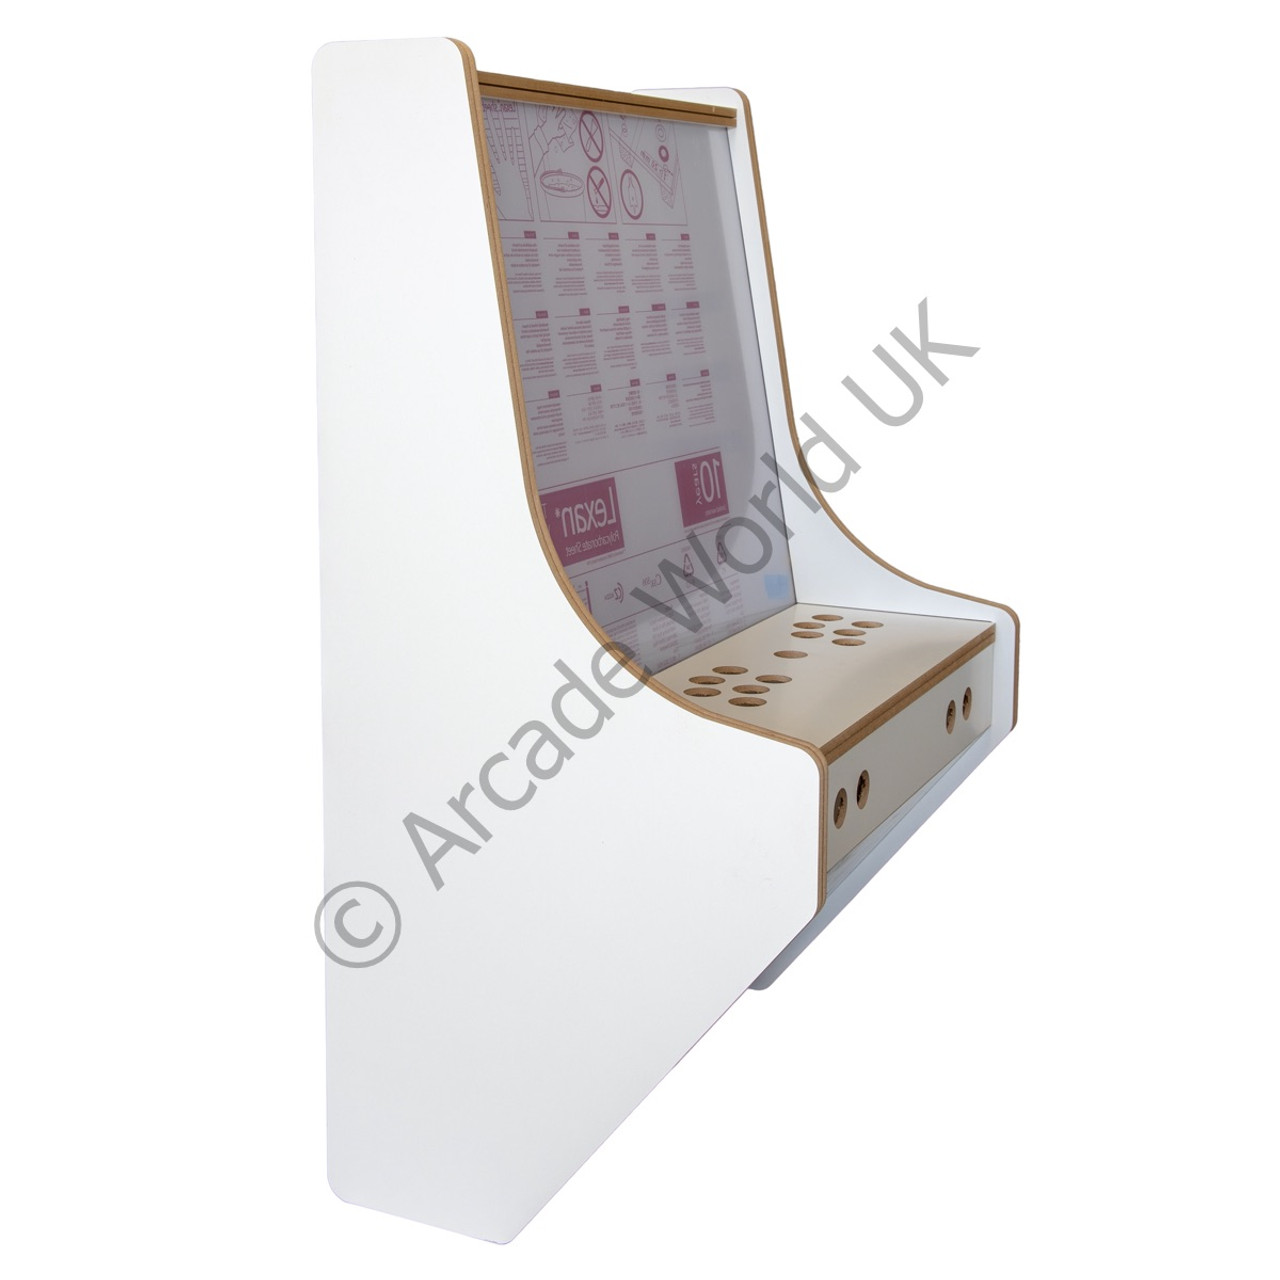 AWUK 19 Inch 2 Player Wall Mounted Arcade Cabinet Kit - White